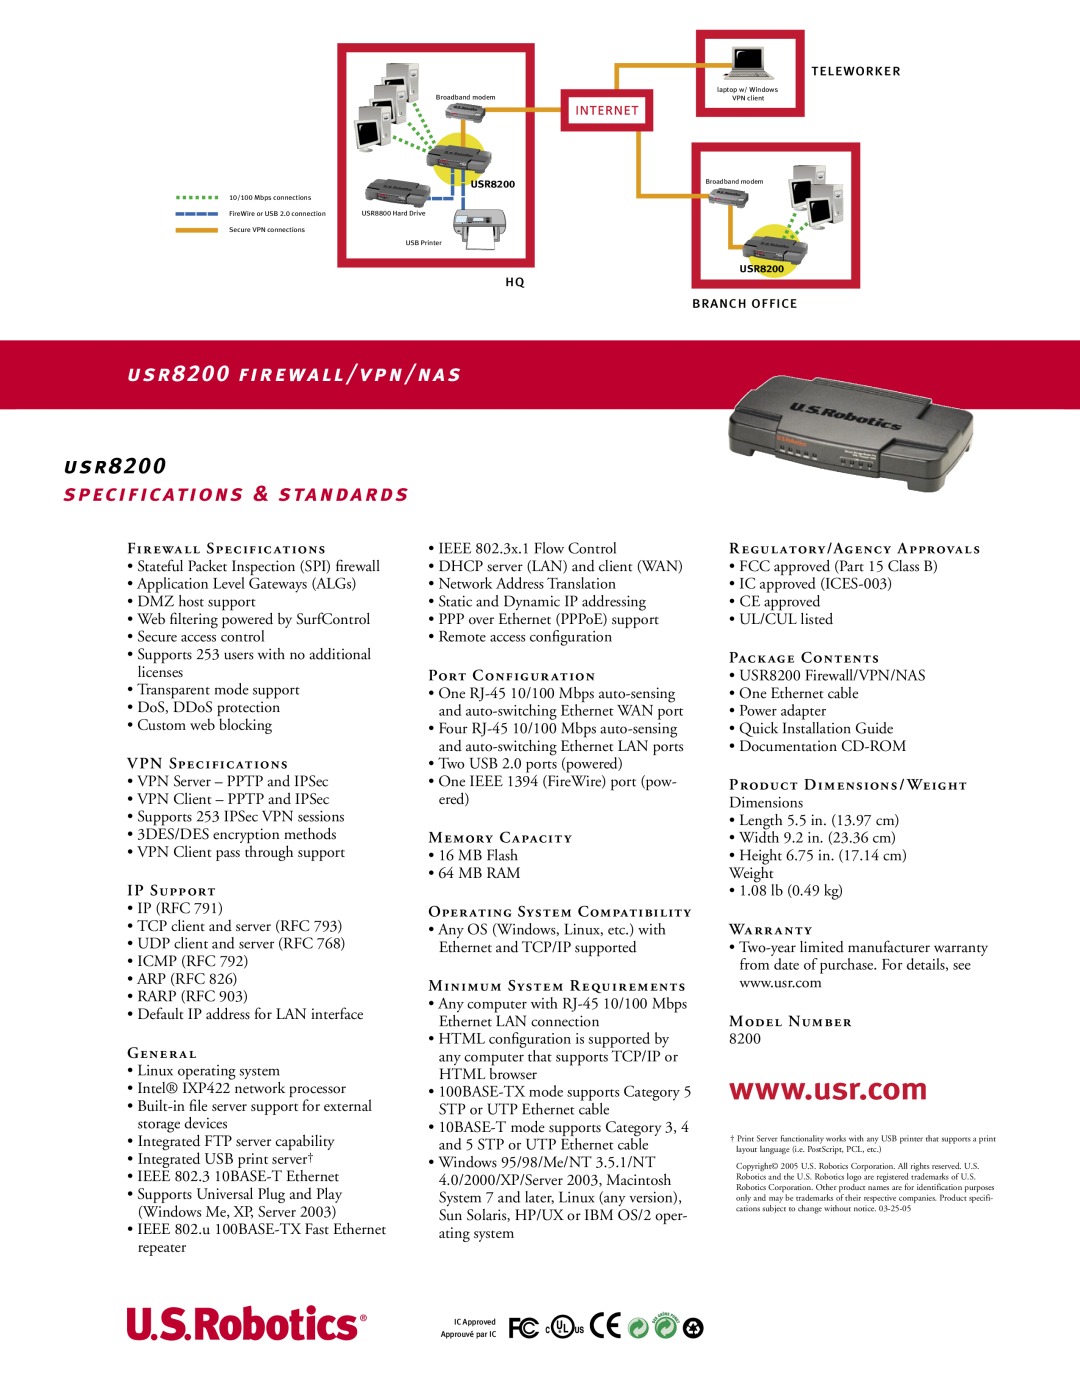 USRobotics Modem/Router manual usr8200 firewall/vpn/nas, specifications & standards 